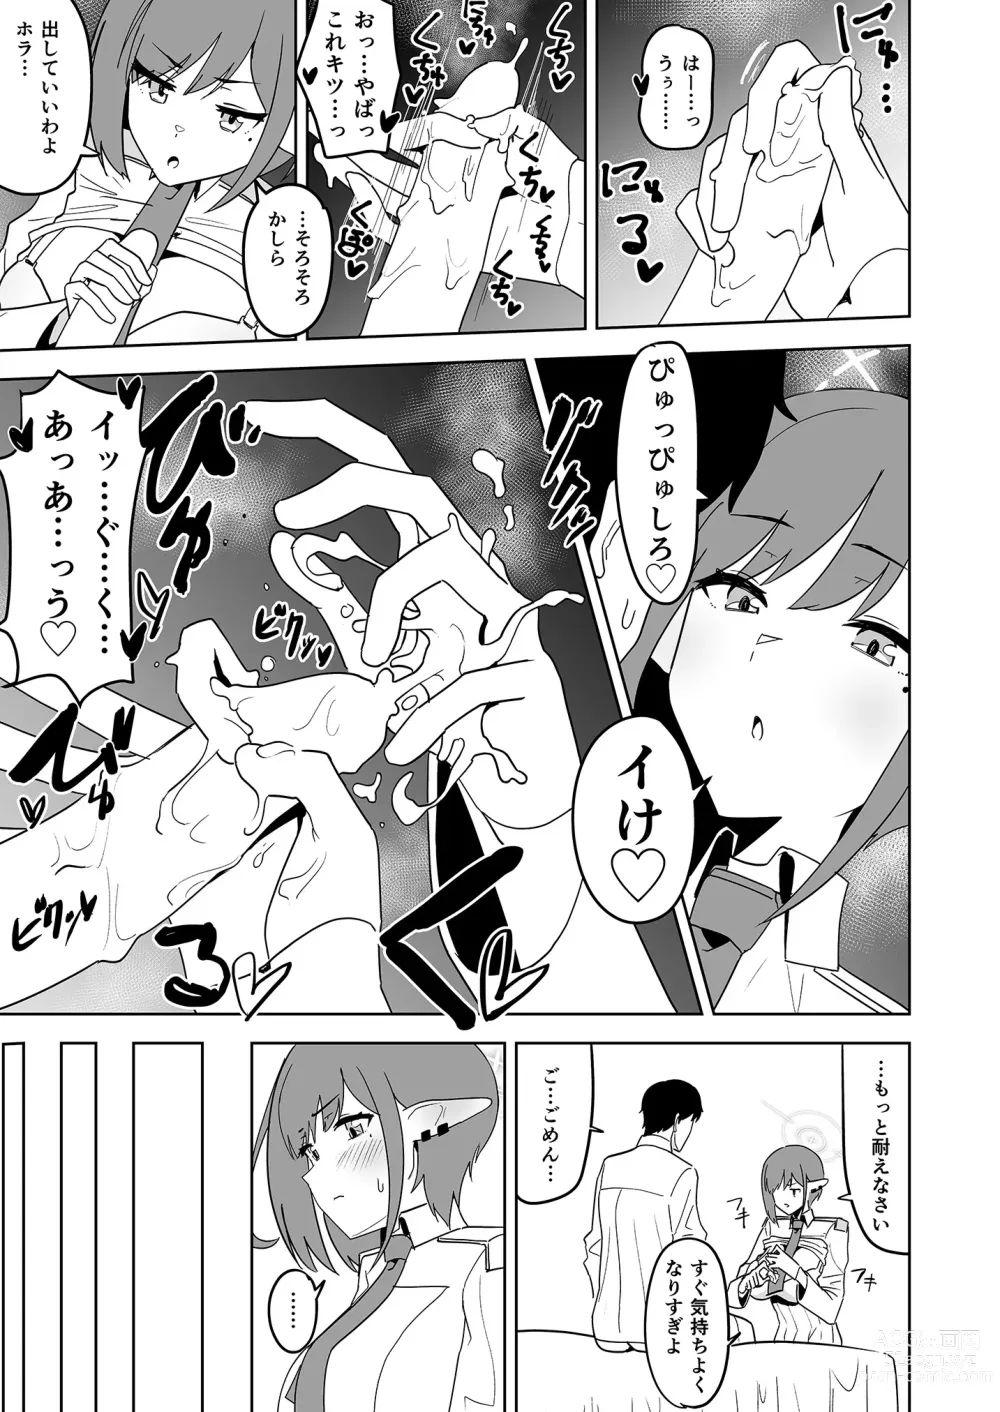 Page 8 of doujinshi Aoi ni Tekoki Shite Moraou - Lets Aoi give you a hand job.